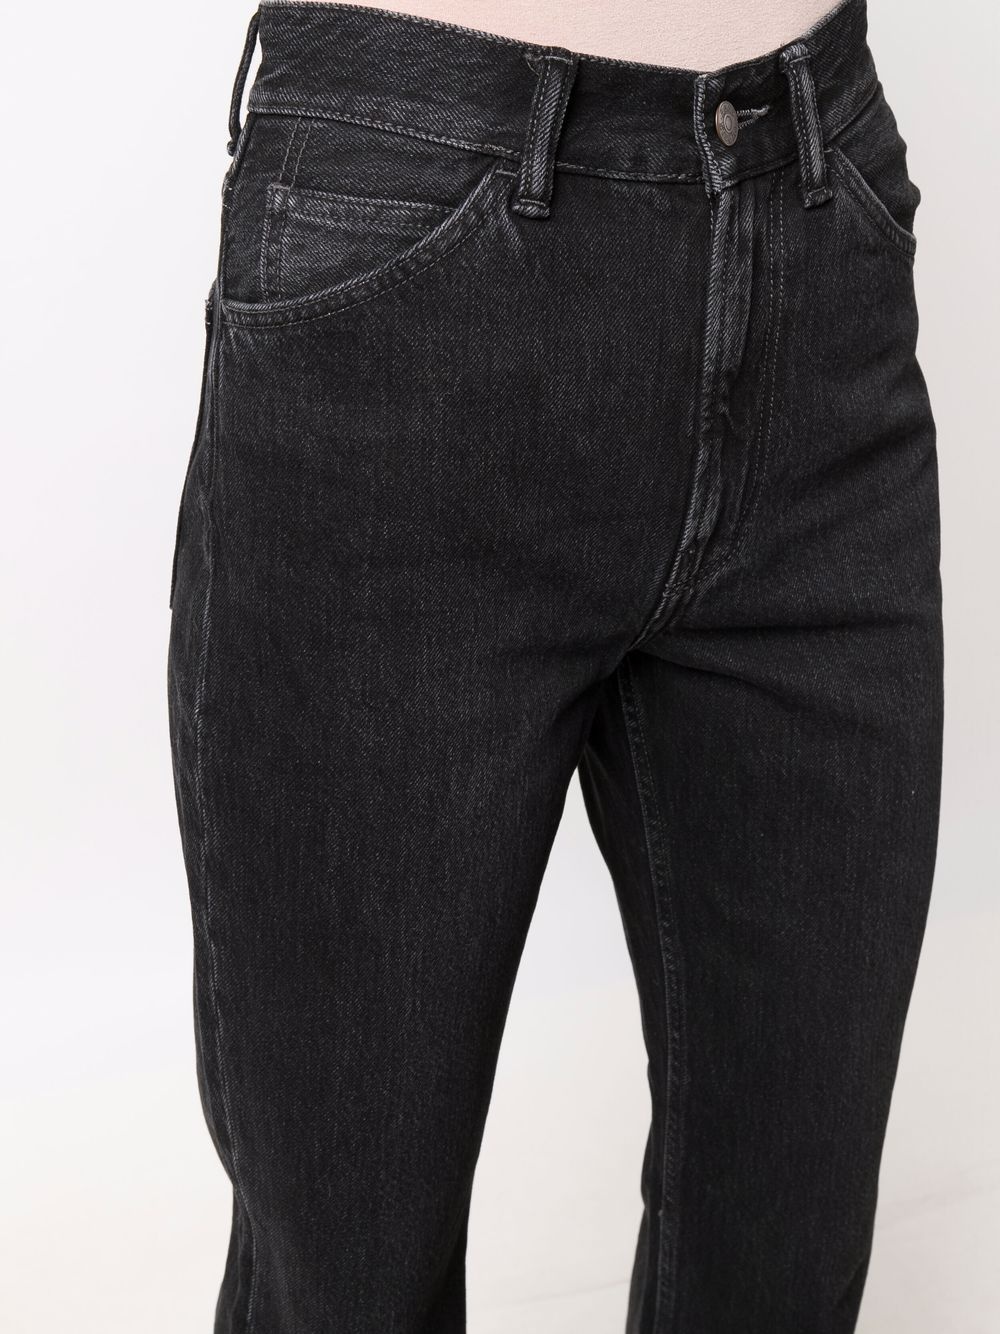 Vintage 1977 high-waist jeans - 5